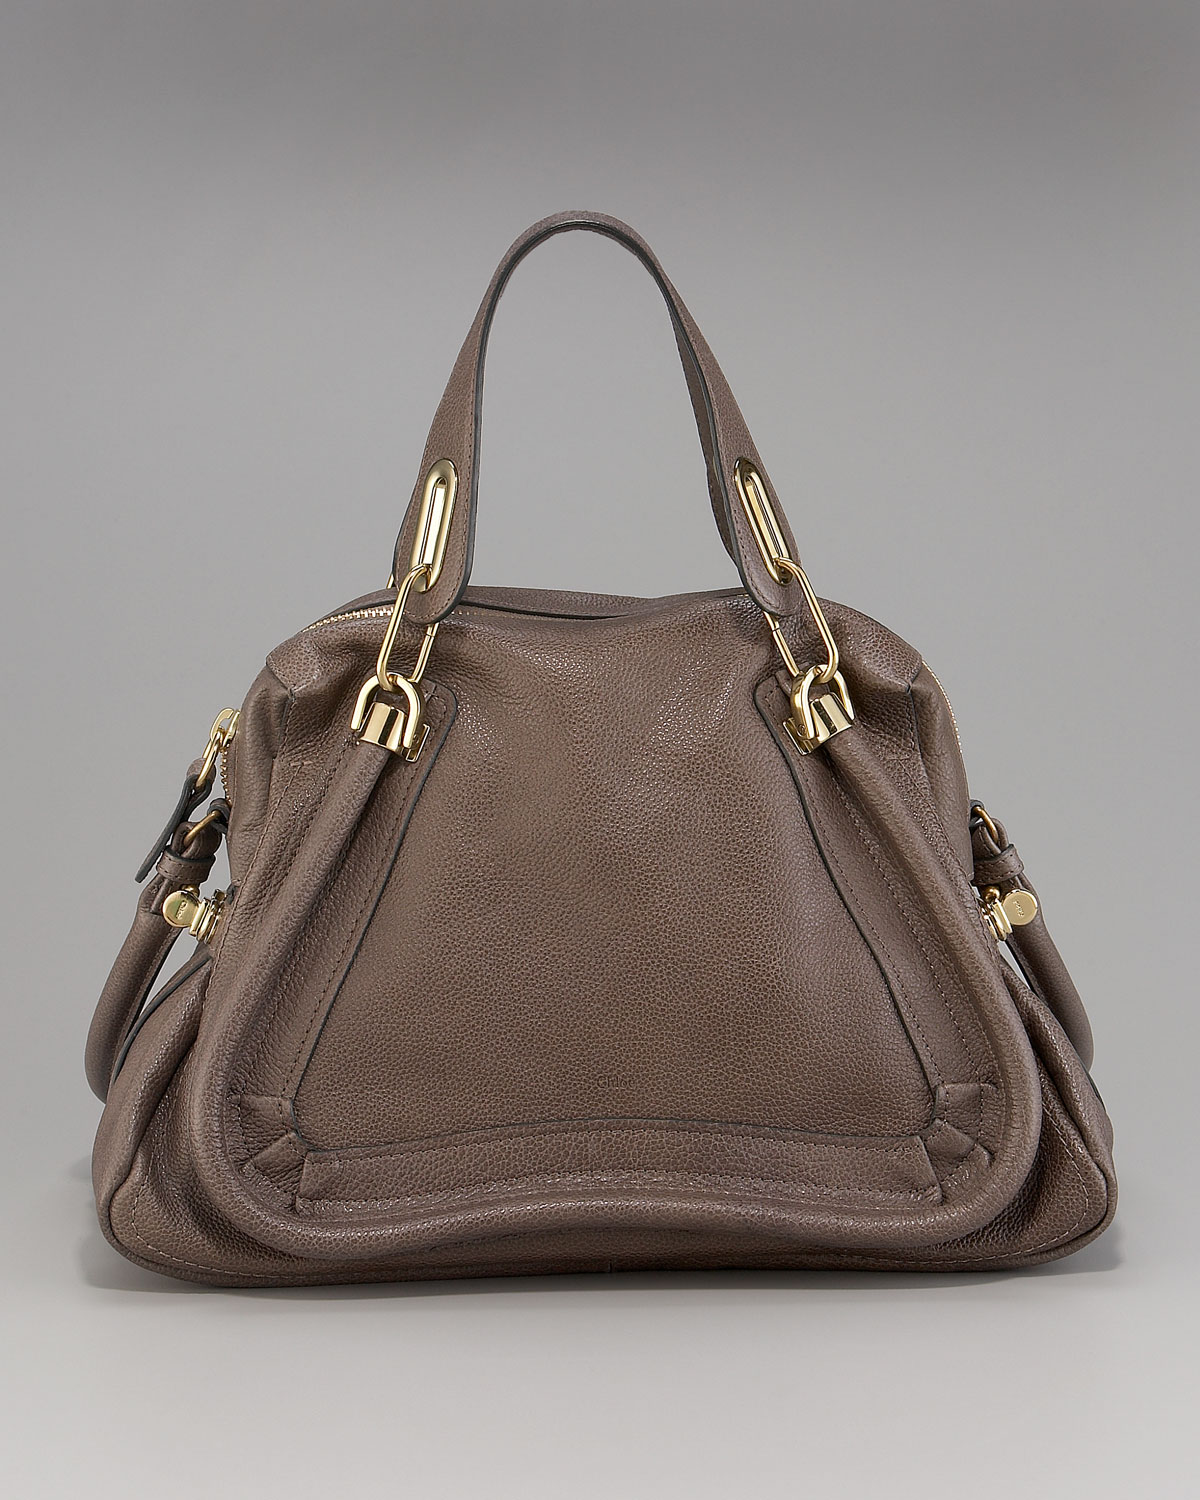 Lyst - Chloé Paraty Shoulder Bag in Brown